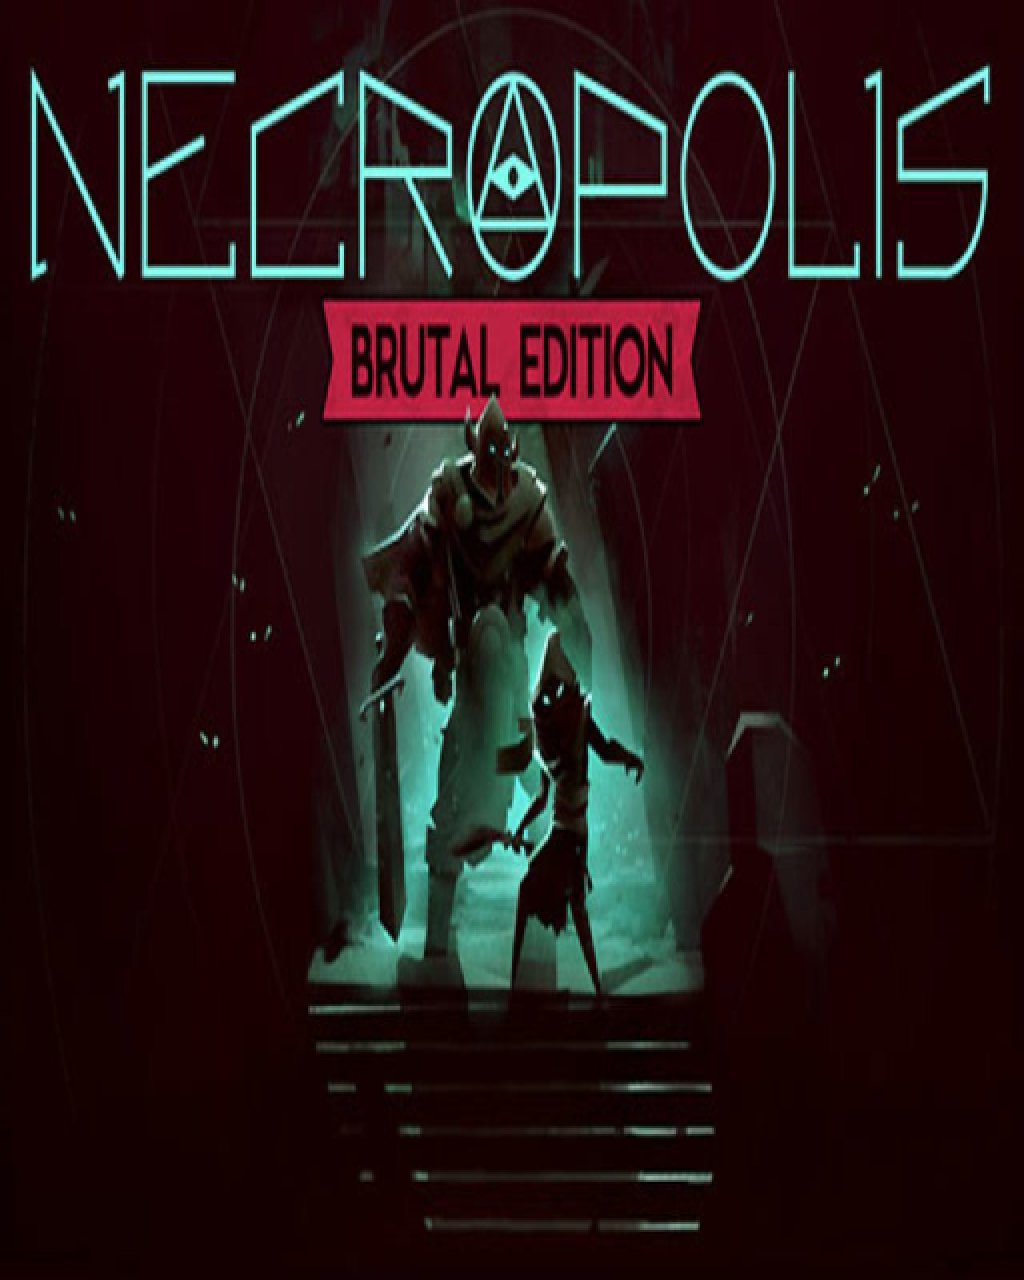 NECROPOLIS BRUTAL EDITION